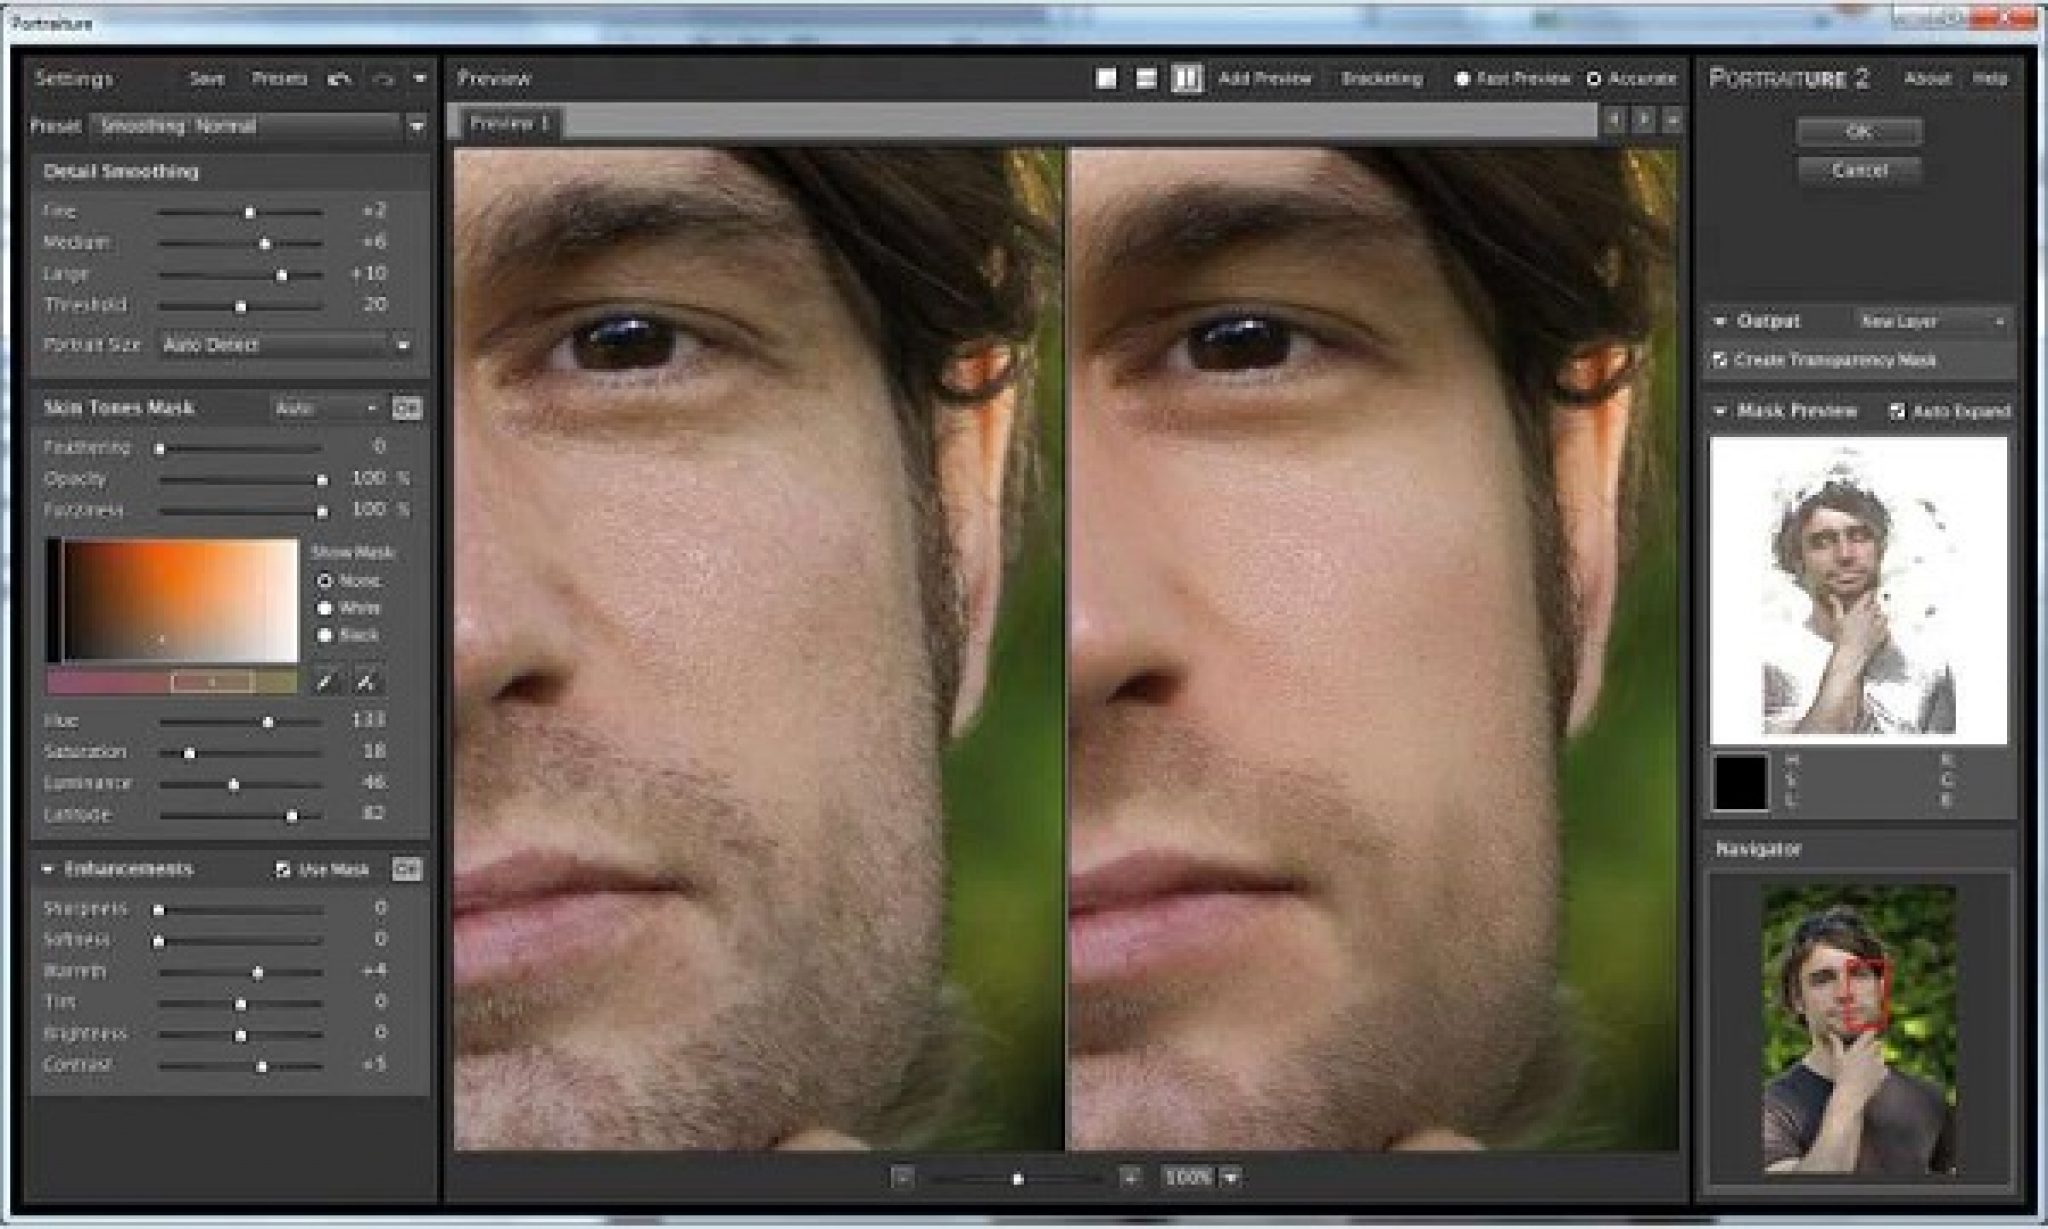 imagenomic portraiture 2.3.4 photoshop plugin free download